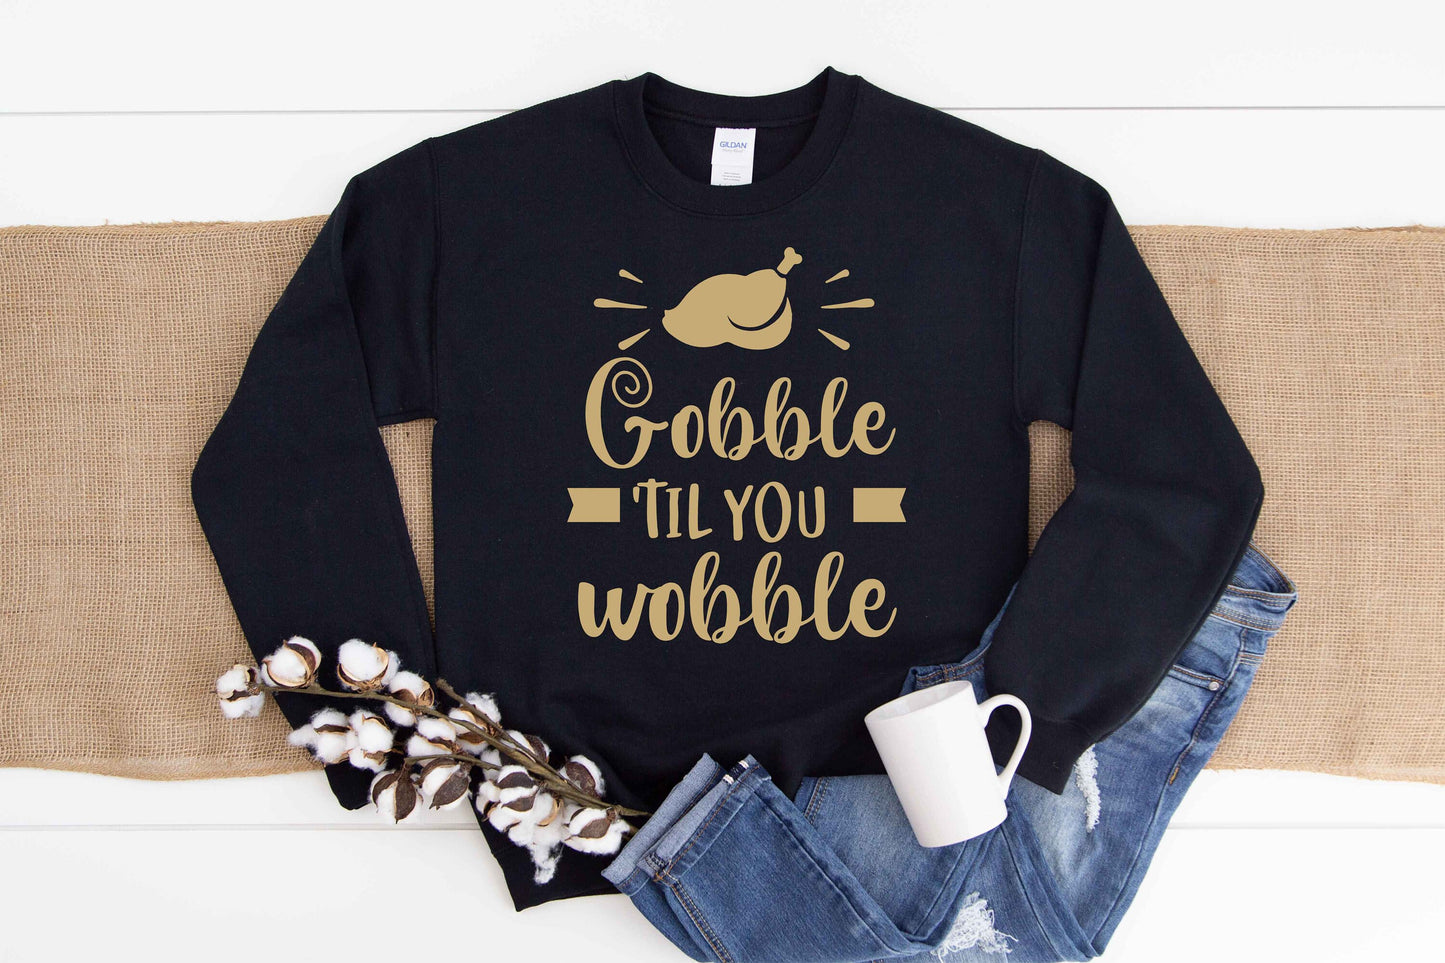 Gobble Til You Wobble Unisex Crewneck Fleece Pullover Sweatshirt - Thanksgiving Sweatshirt